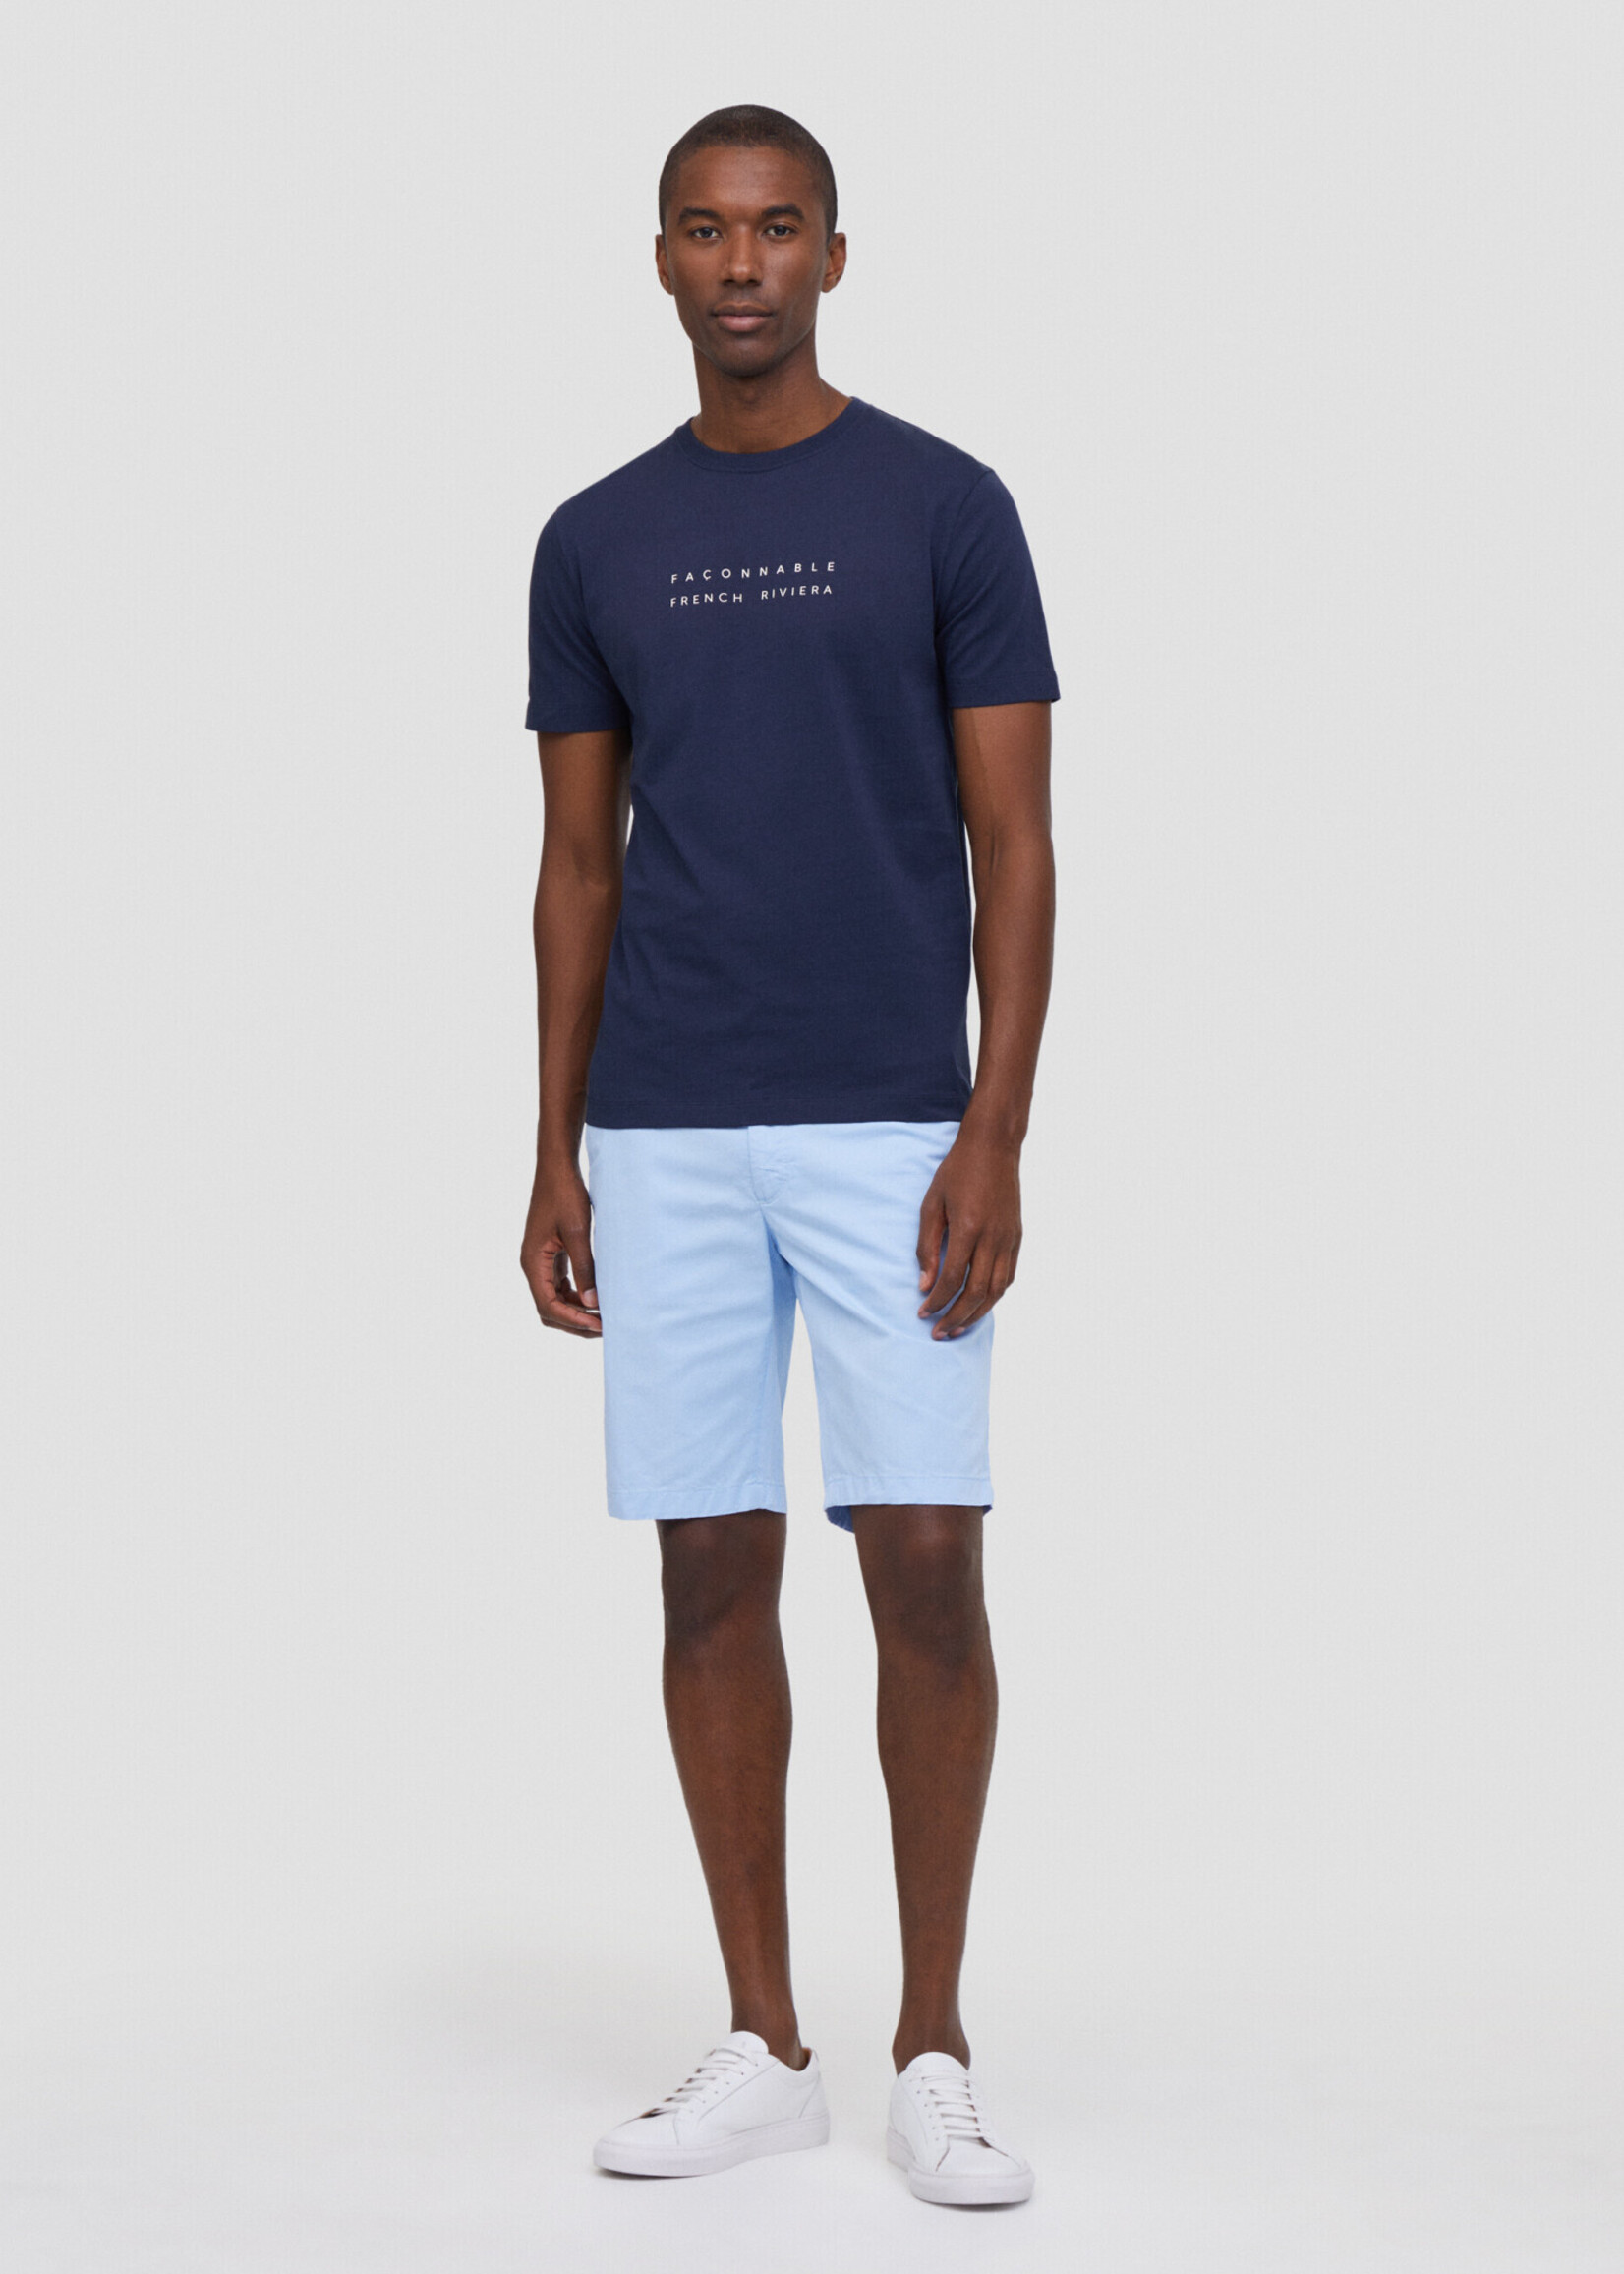 FAÇONNABLE Club fit Classic T-shirt - Marine Blue